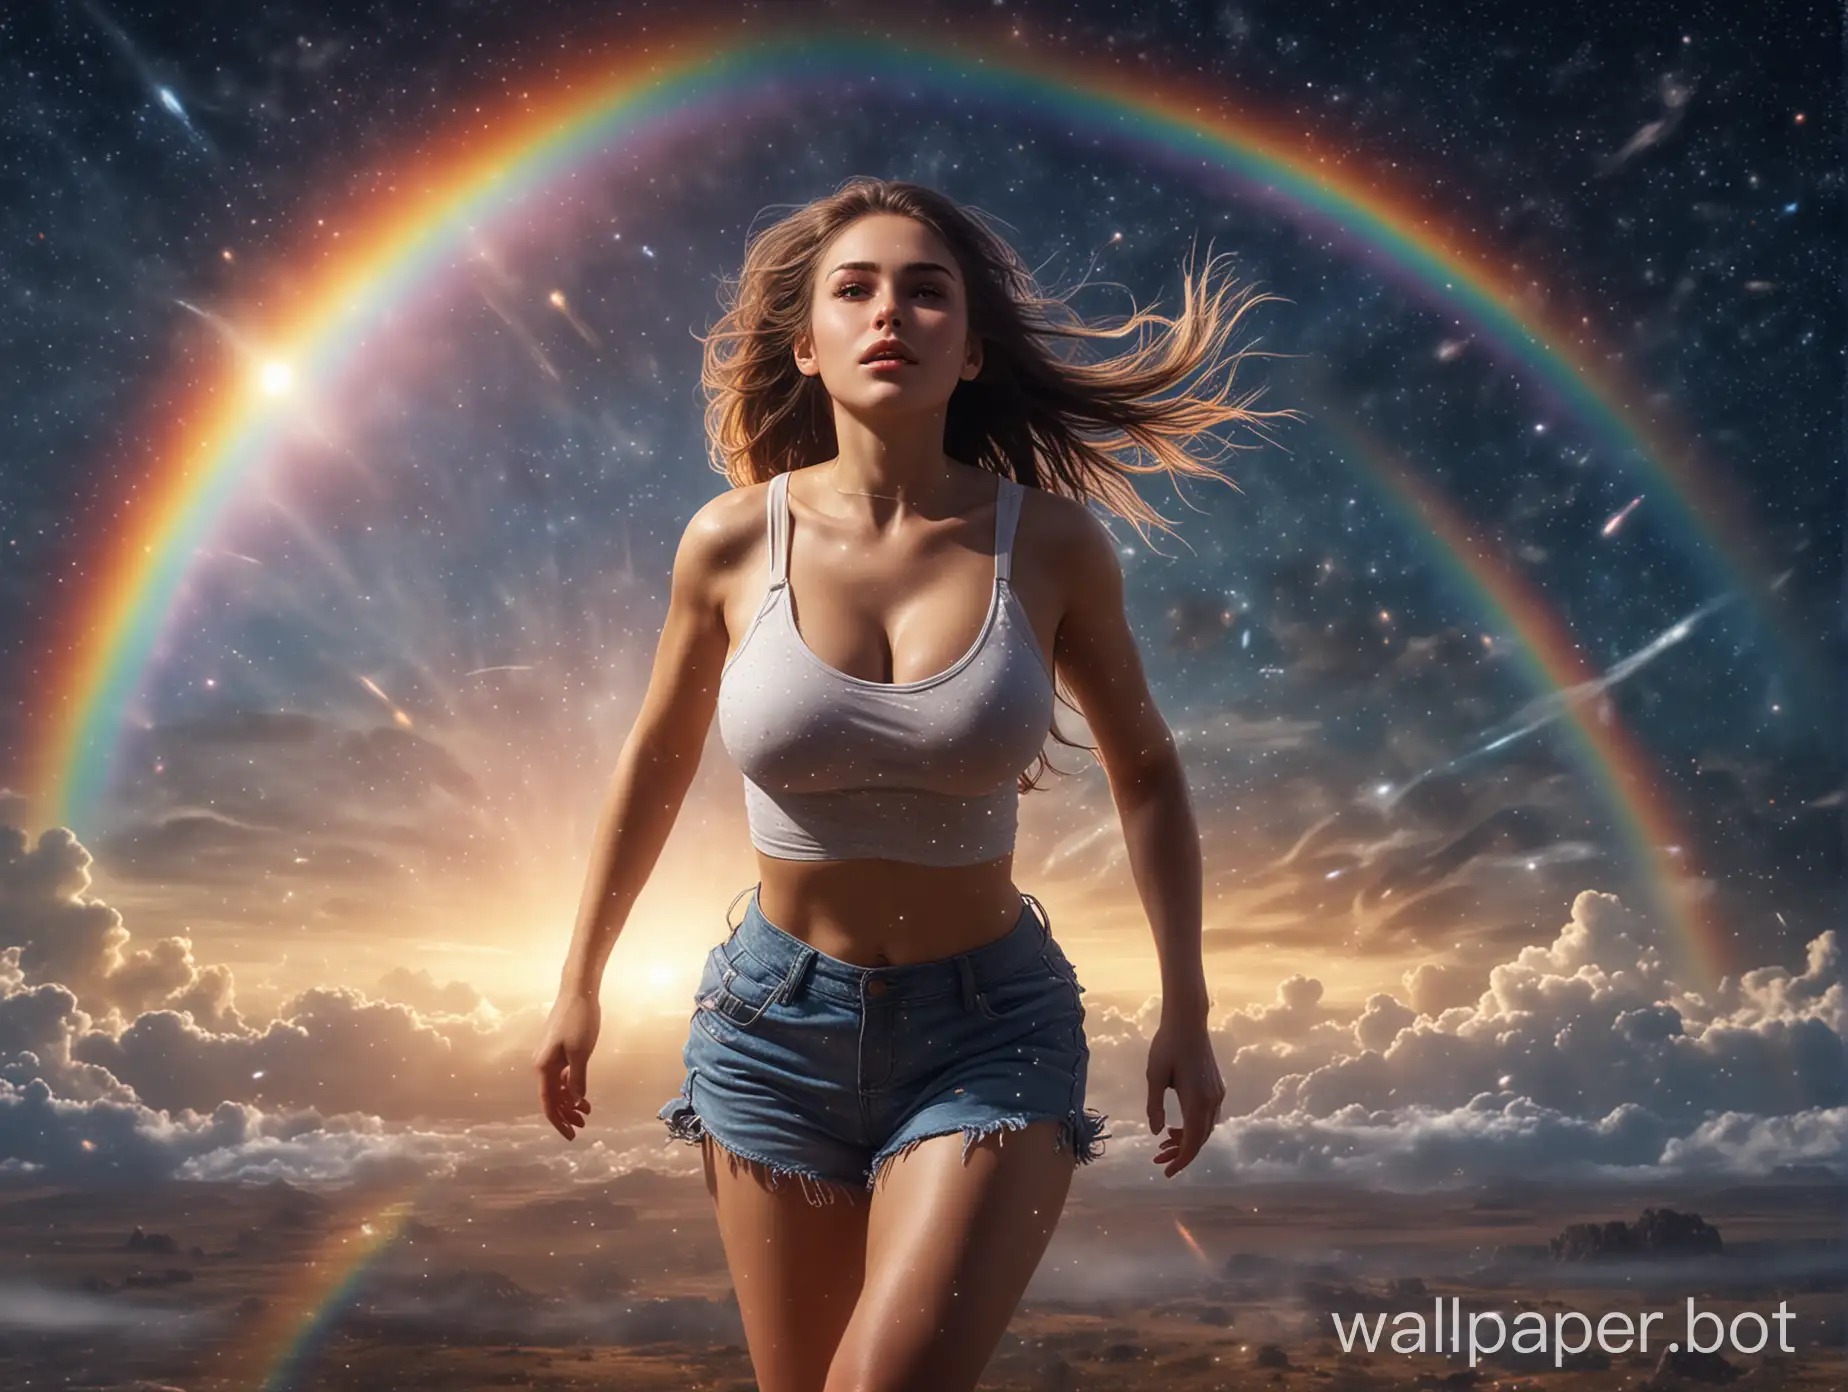 Fantasy-SciFi-Scene-Beautiful-Girl-Running-Near-Rainbow-Under-Starry-Sky